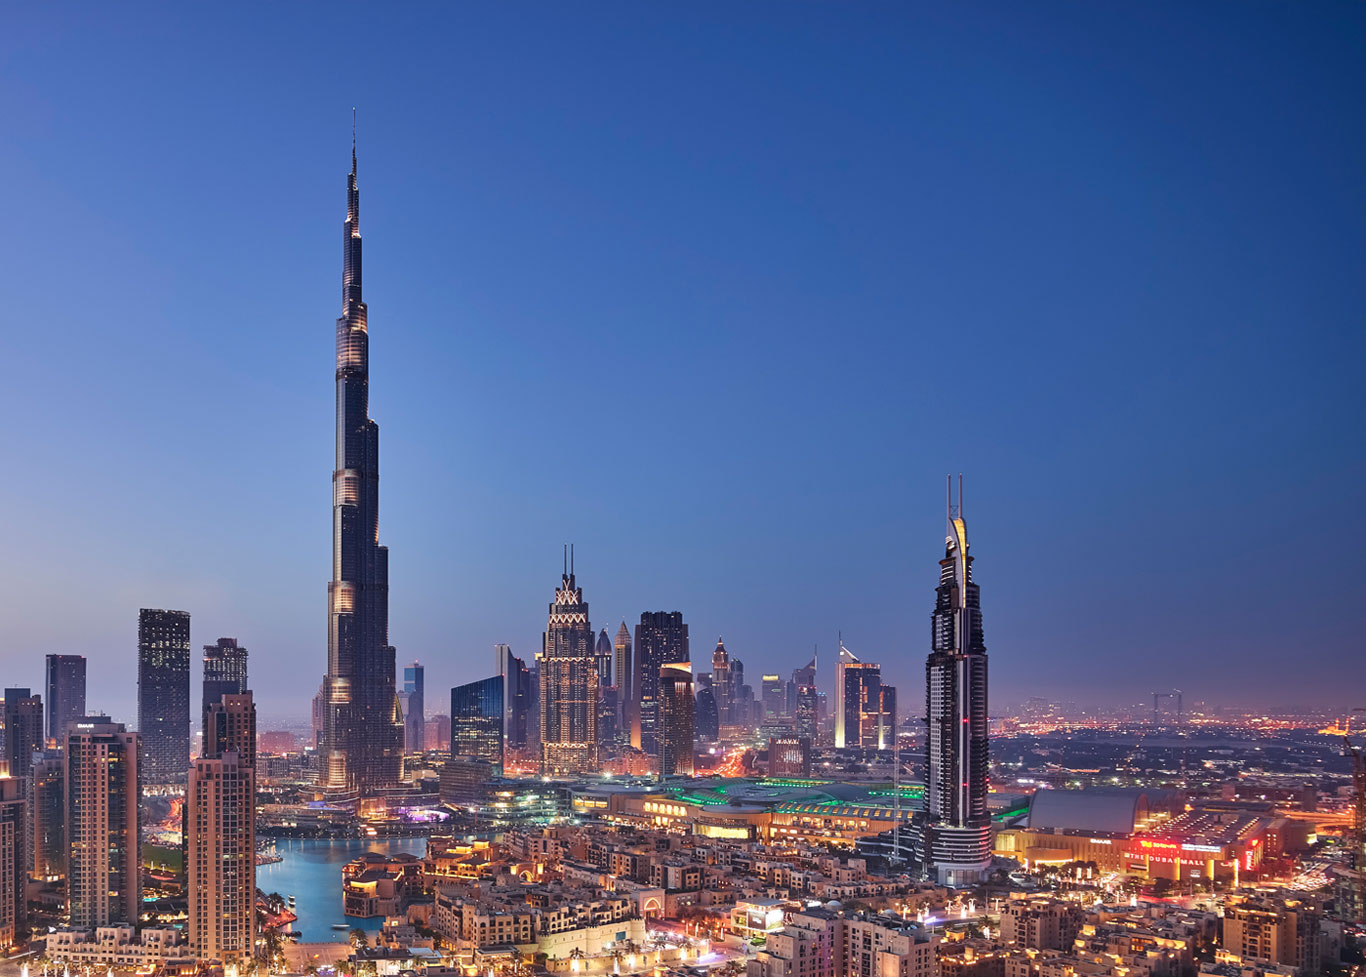 A stunning view of Burj Khalifa